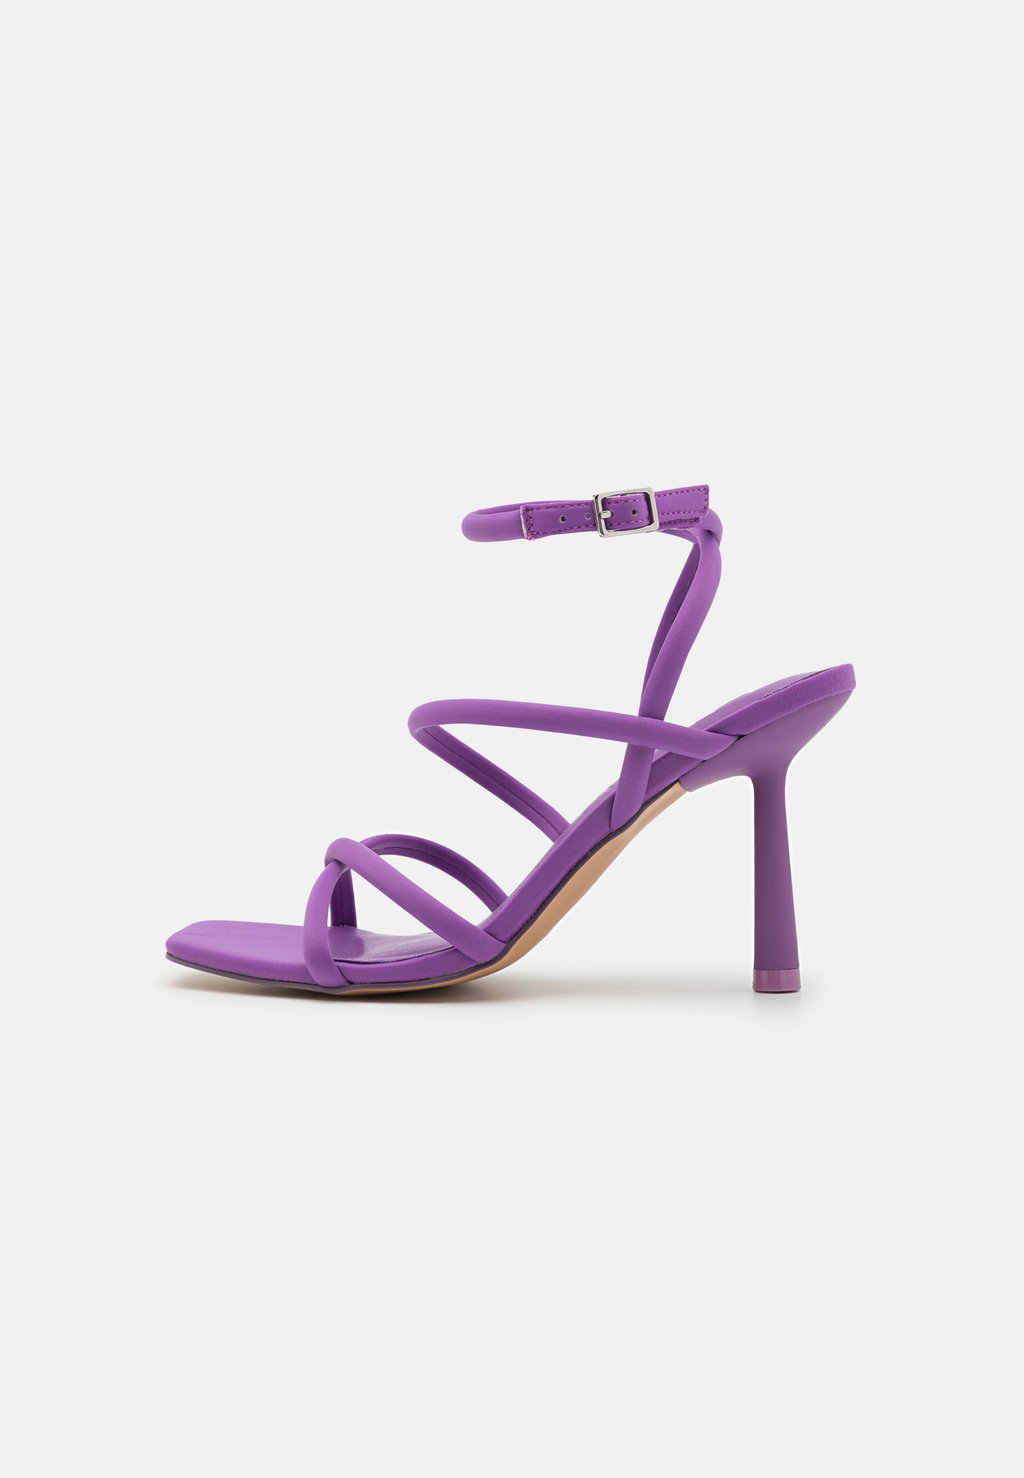 Сандалии ONLAMINA ANKLE STRAP HEELED Only Shoes, фиолетовый